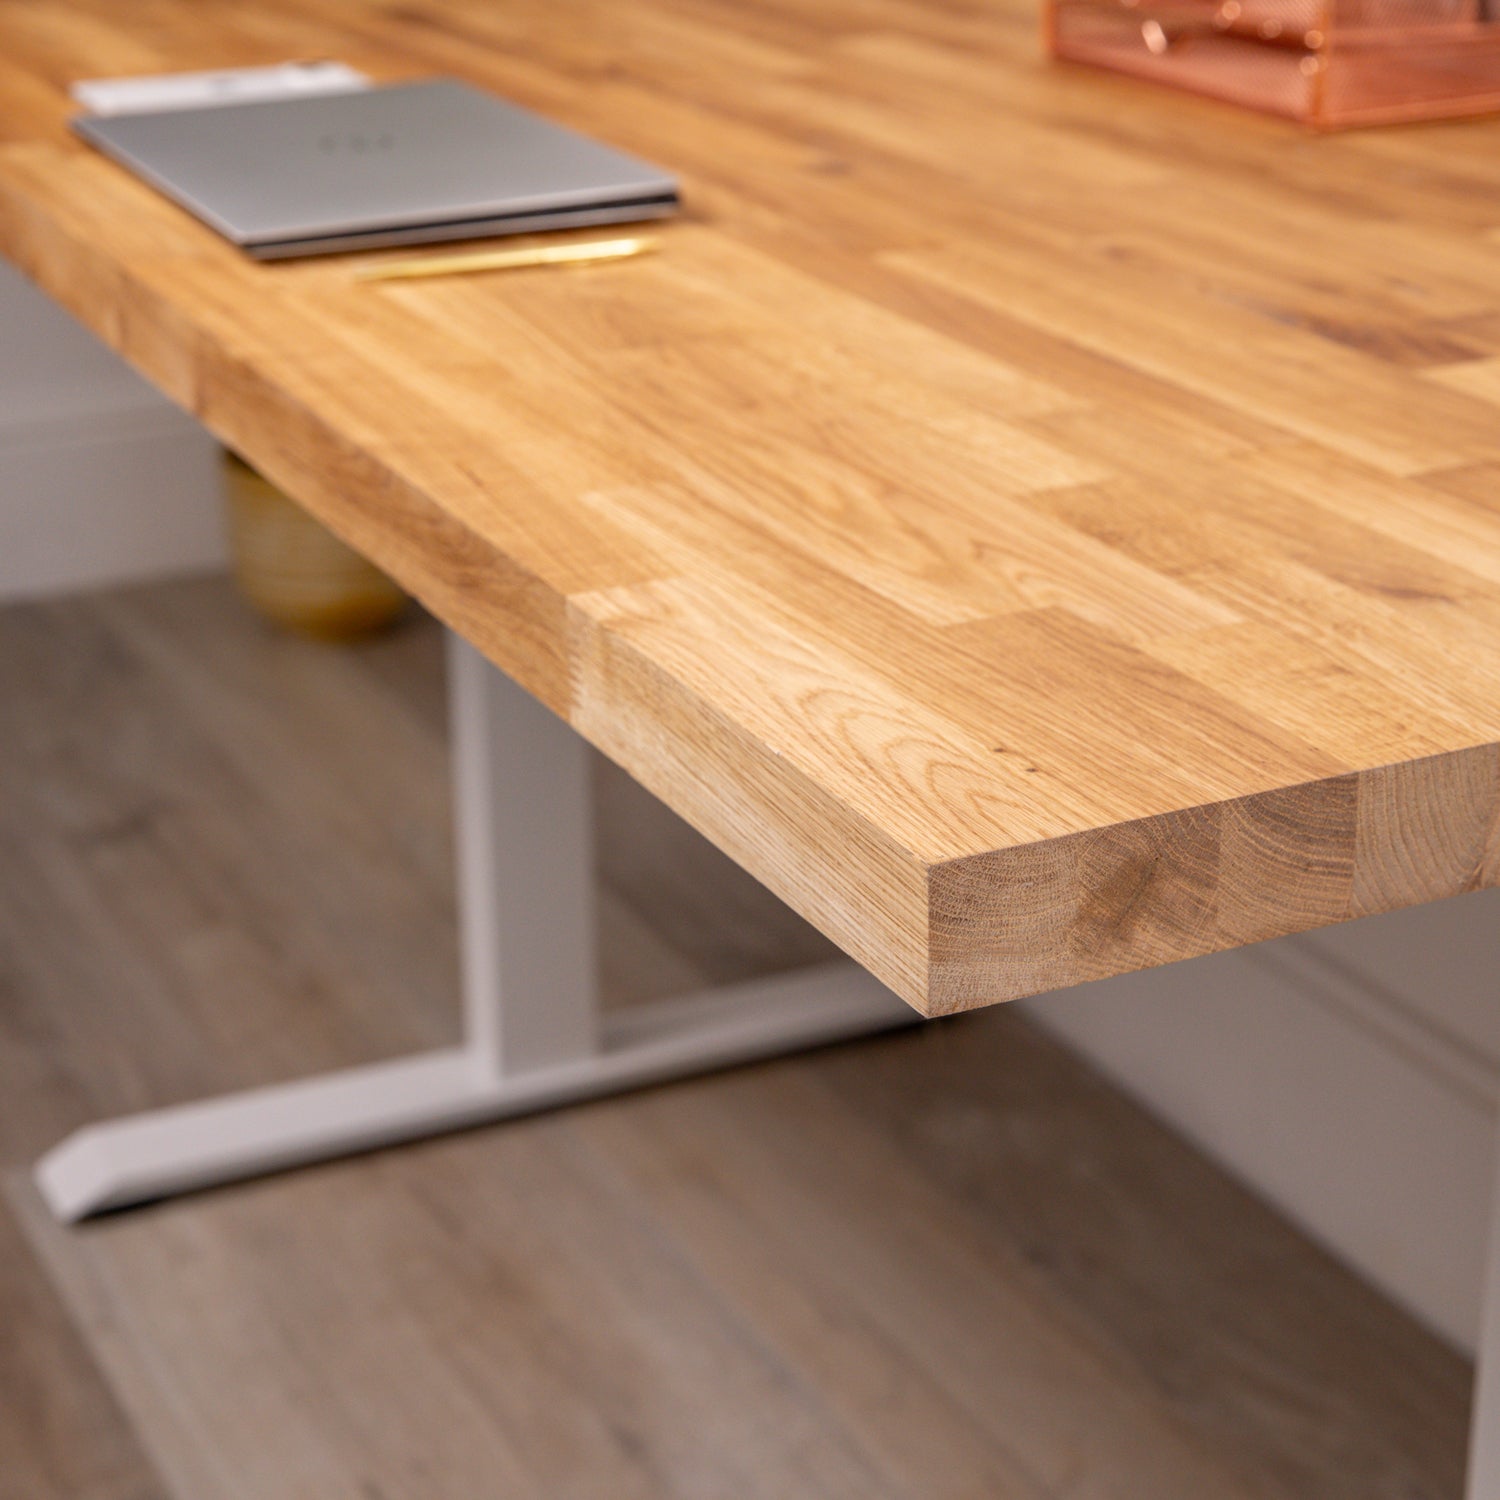 Premium White Sit Stand Electric Desk with Oak Wooden Desktop